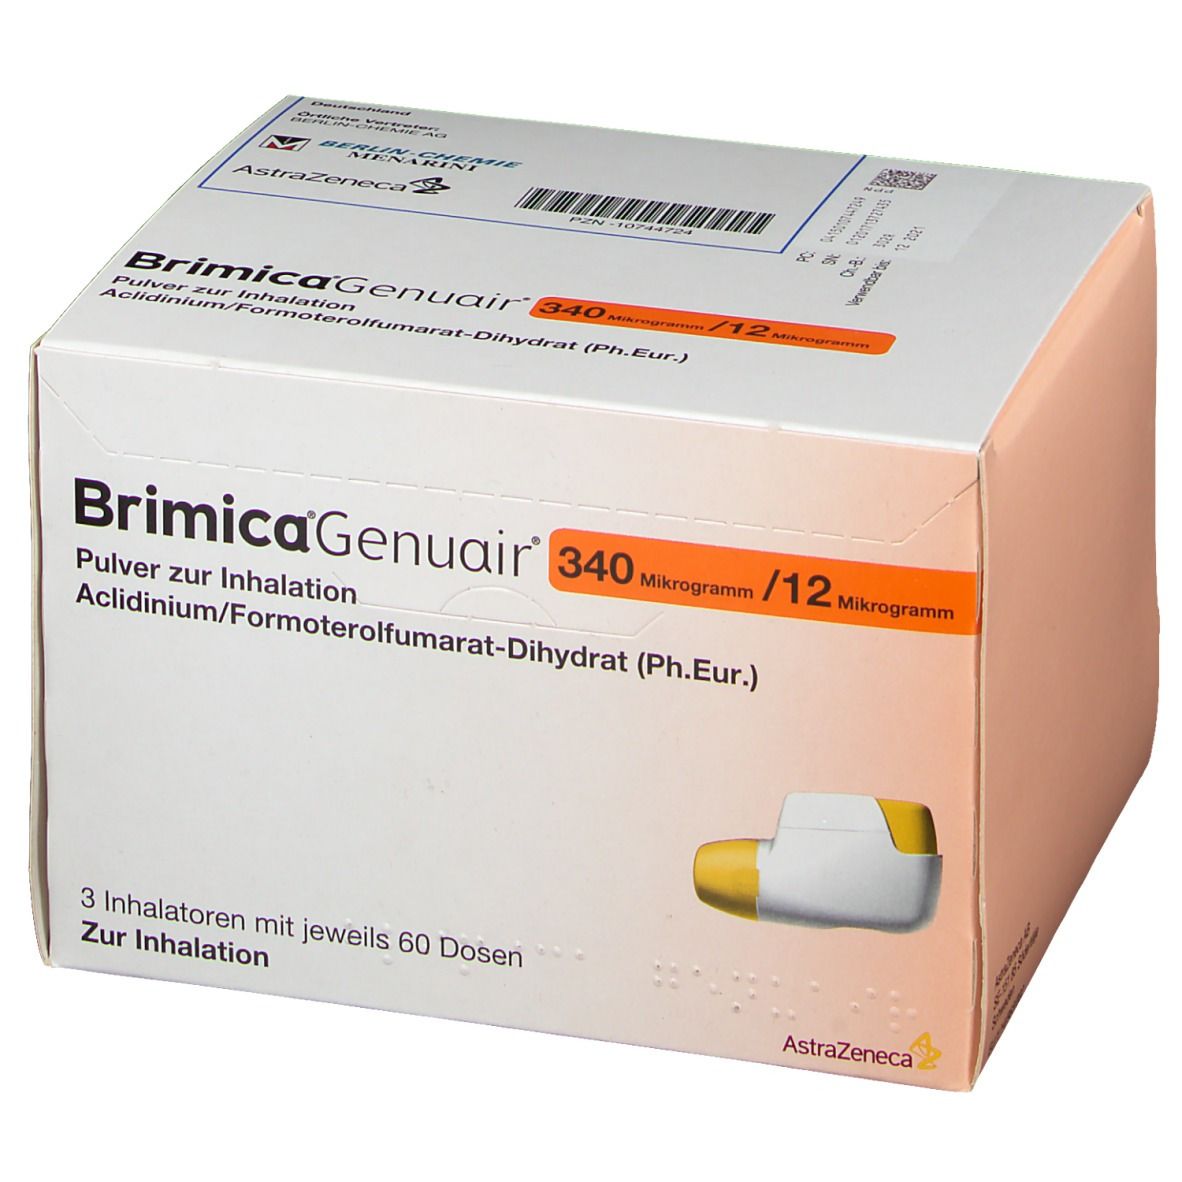 Brimica® Genuair  340 µg/12 µg